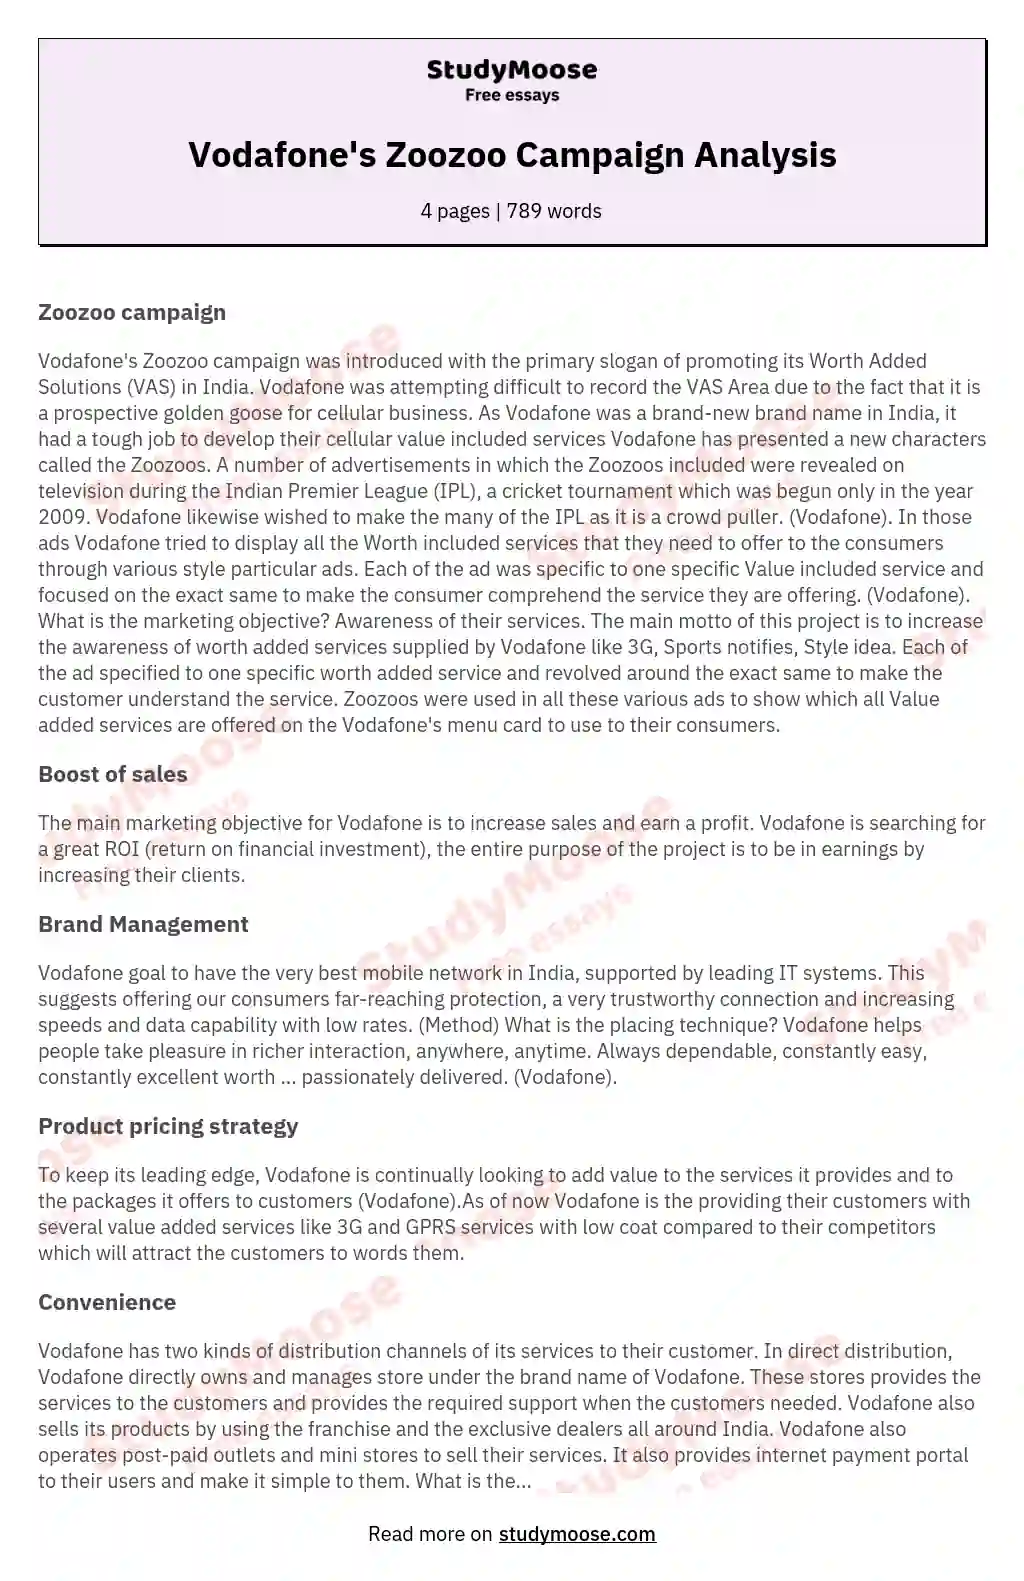 Vodafone's Zoozoo Campaign Analysis essay